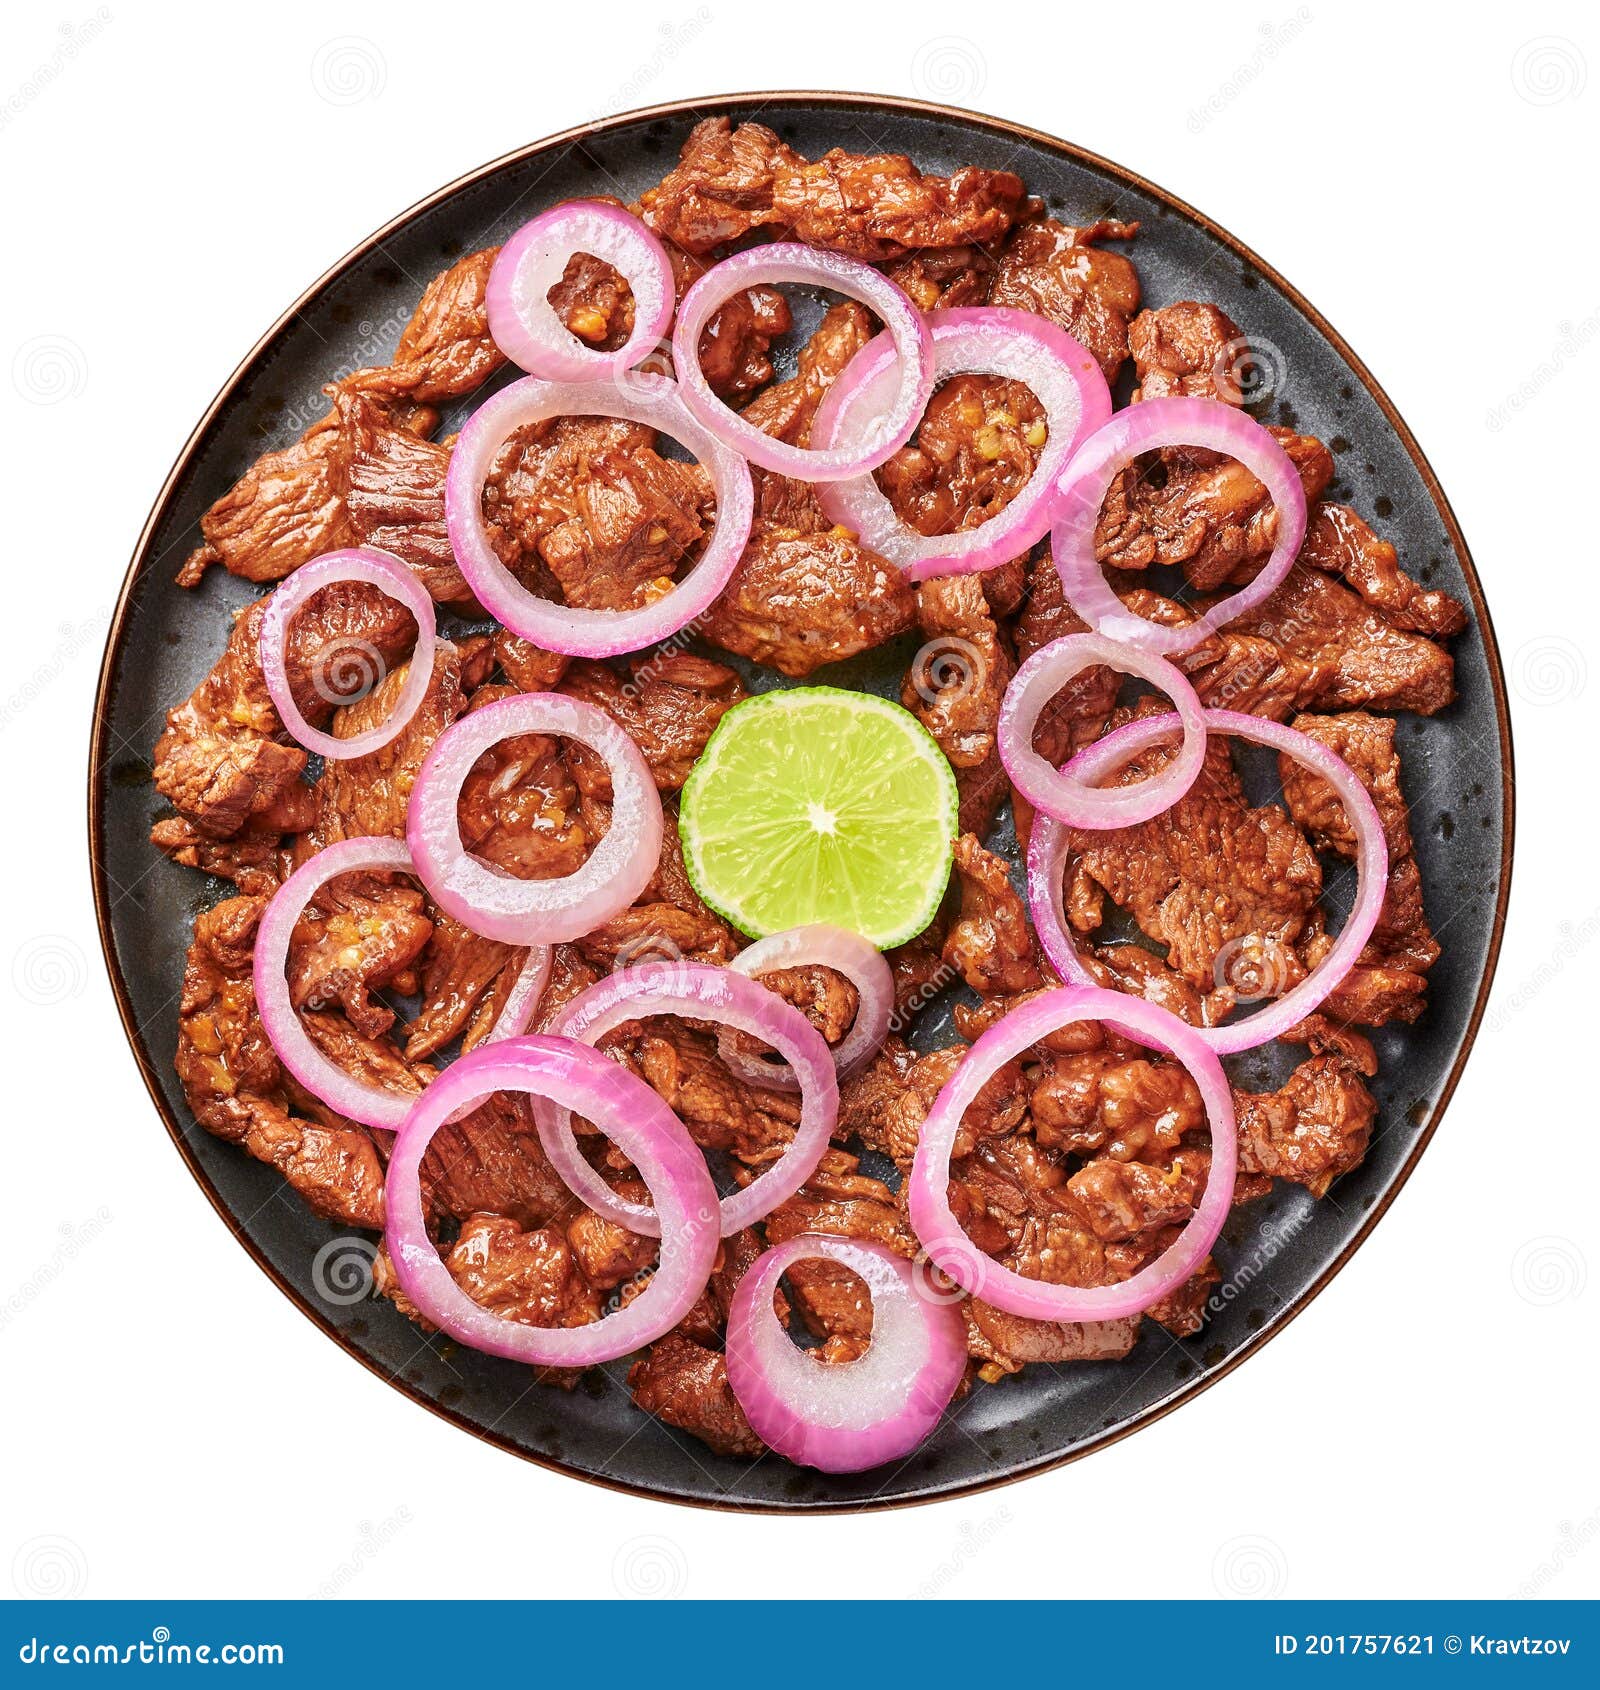 bistek tagalog or bistec encebollado  on white. filipino spanish cuisine beef steak with onion. top view